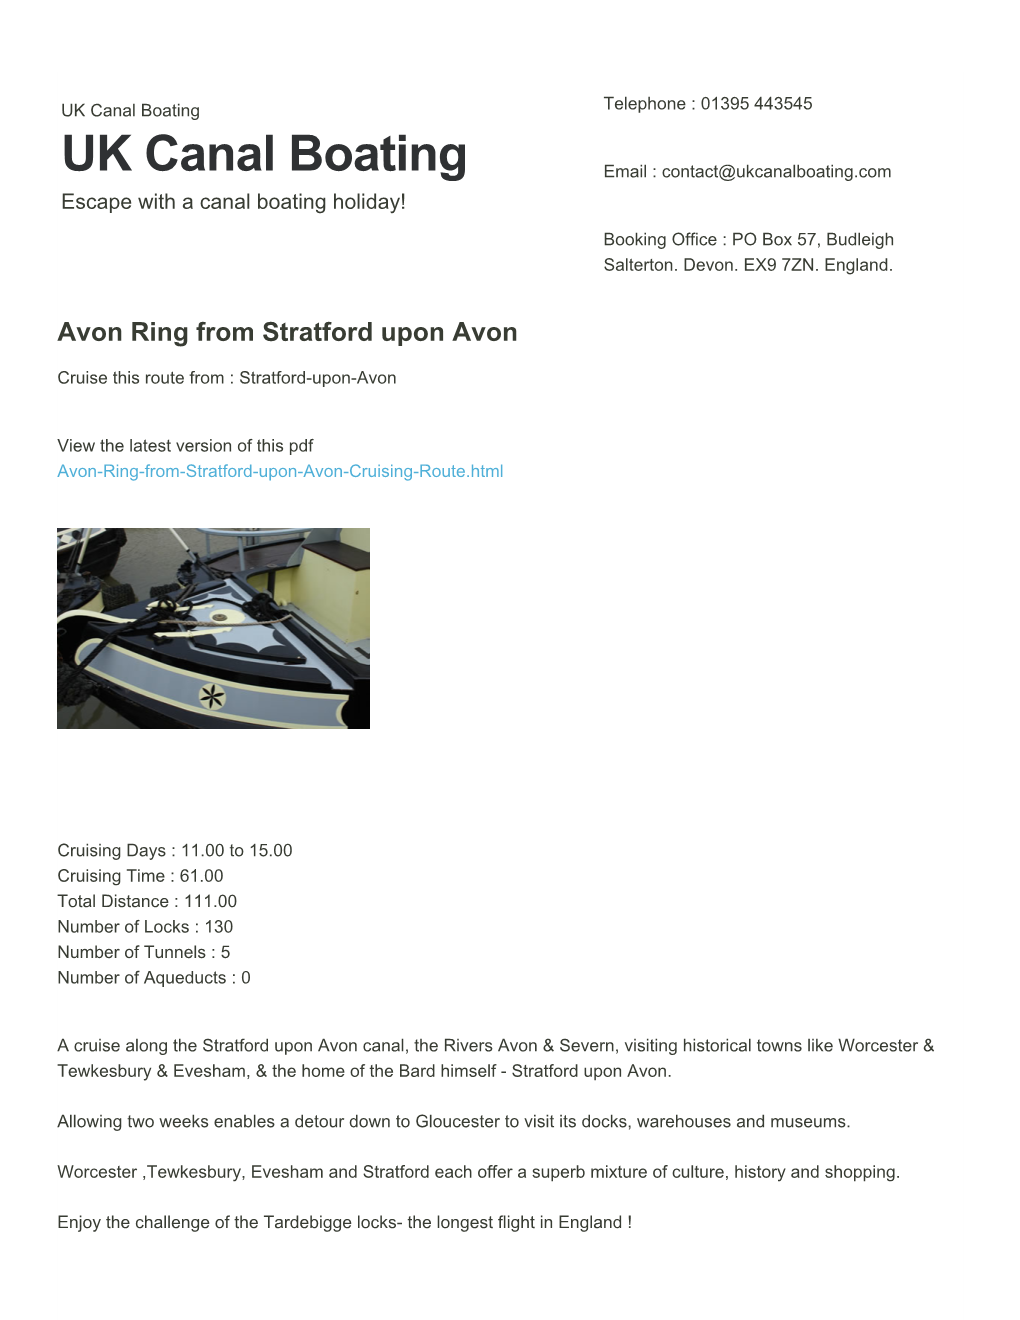 Avon Ring from Stratford Upon Avon | UK Canal Boating